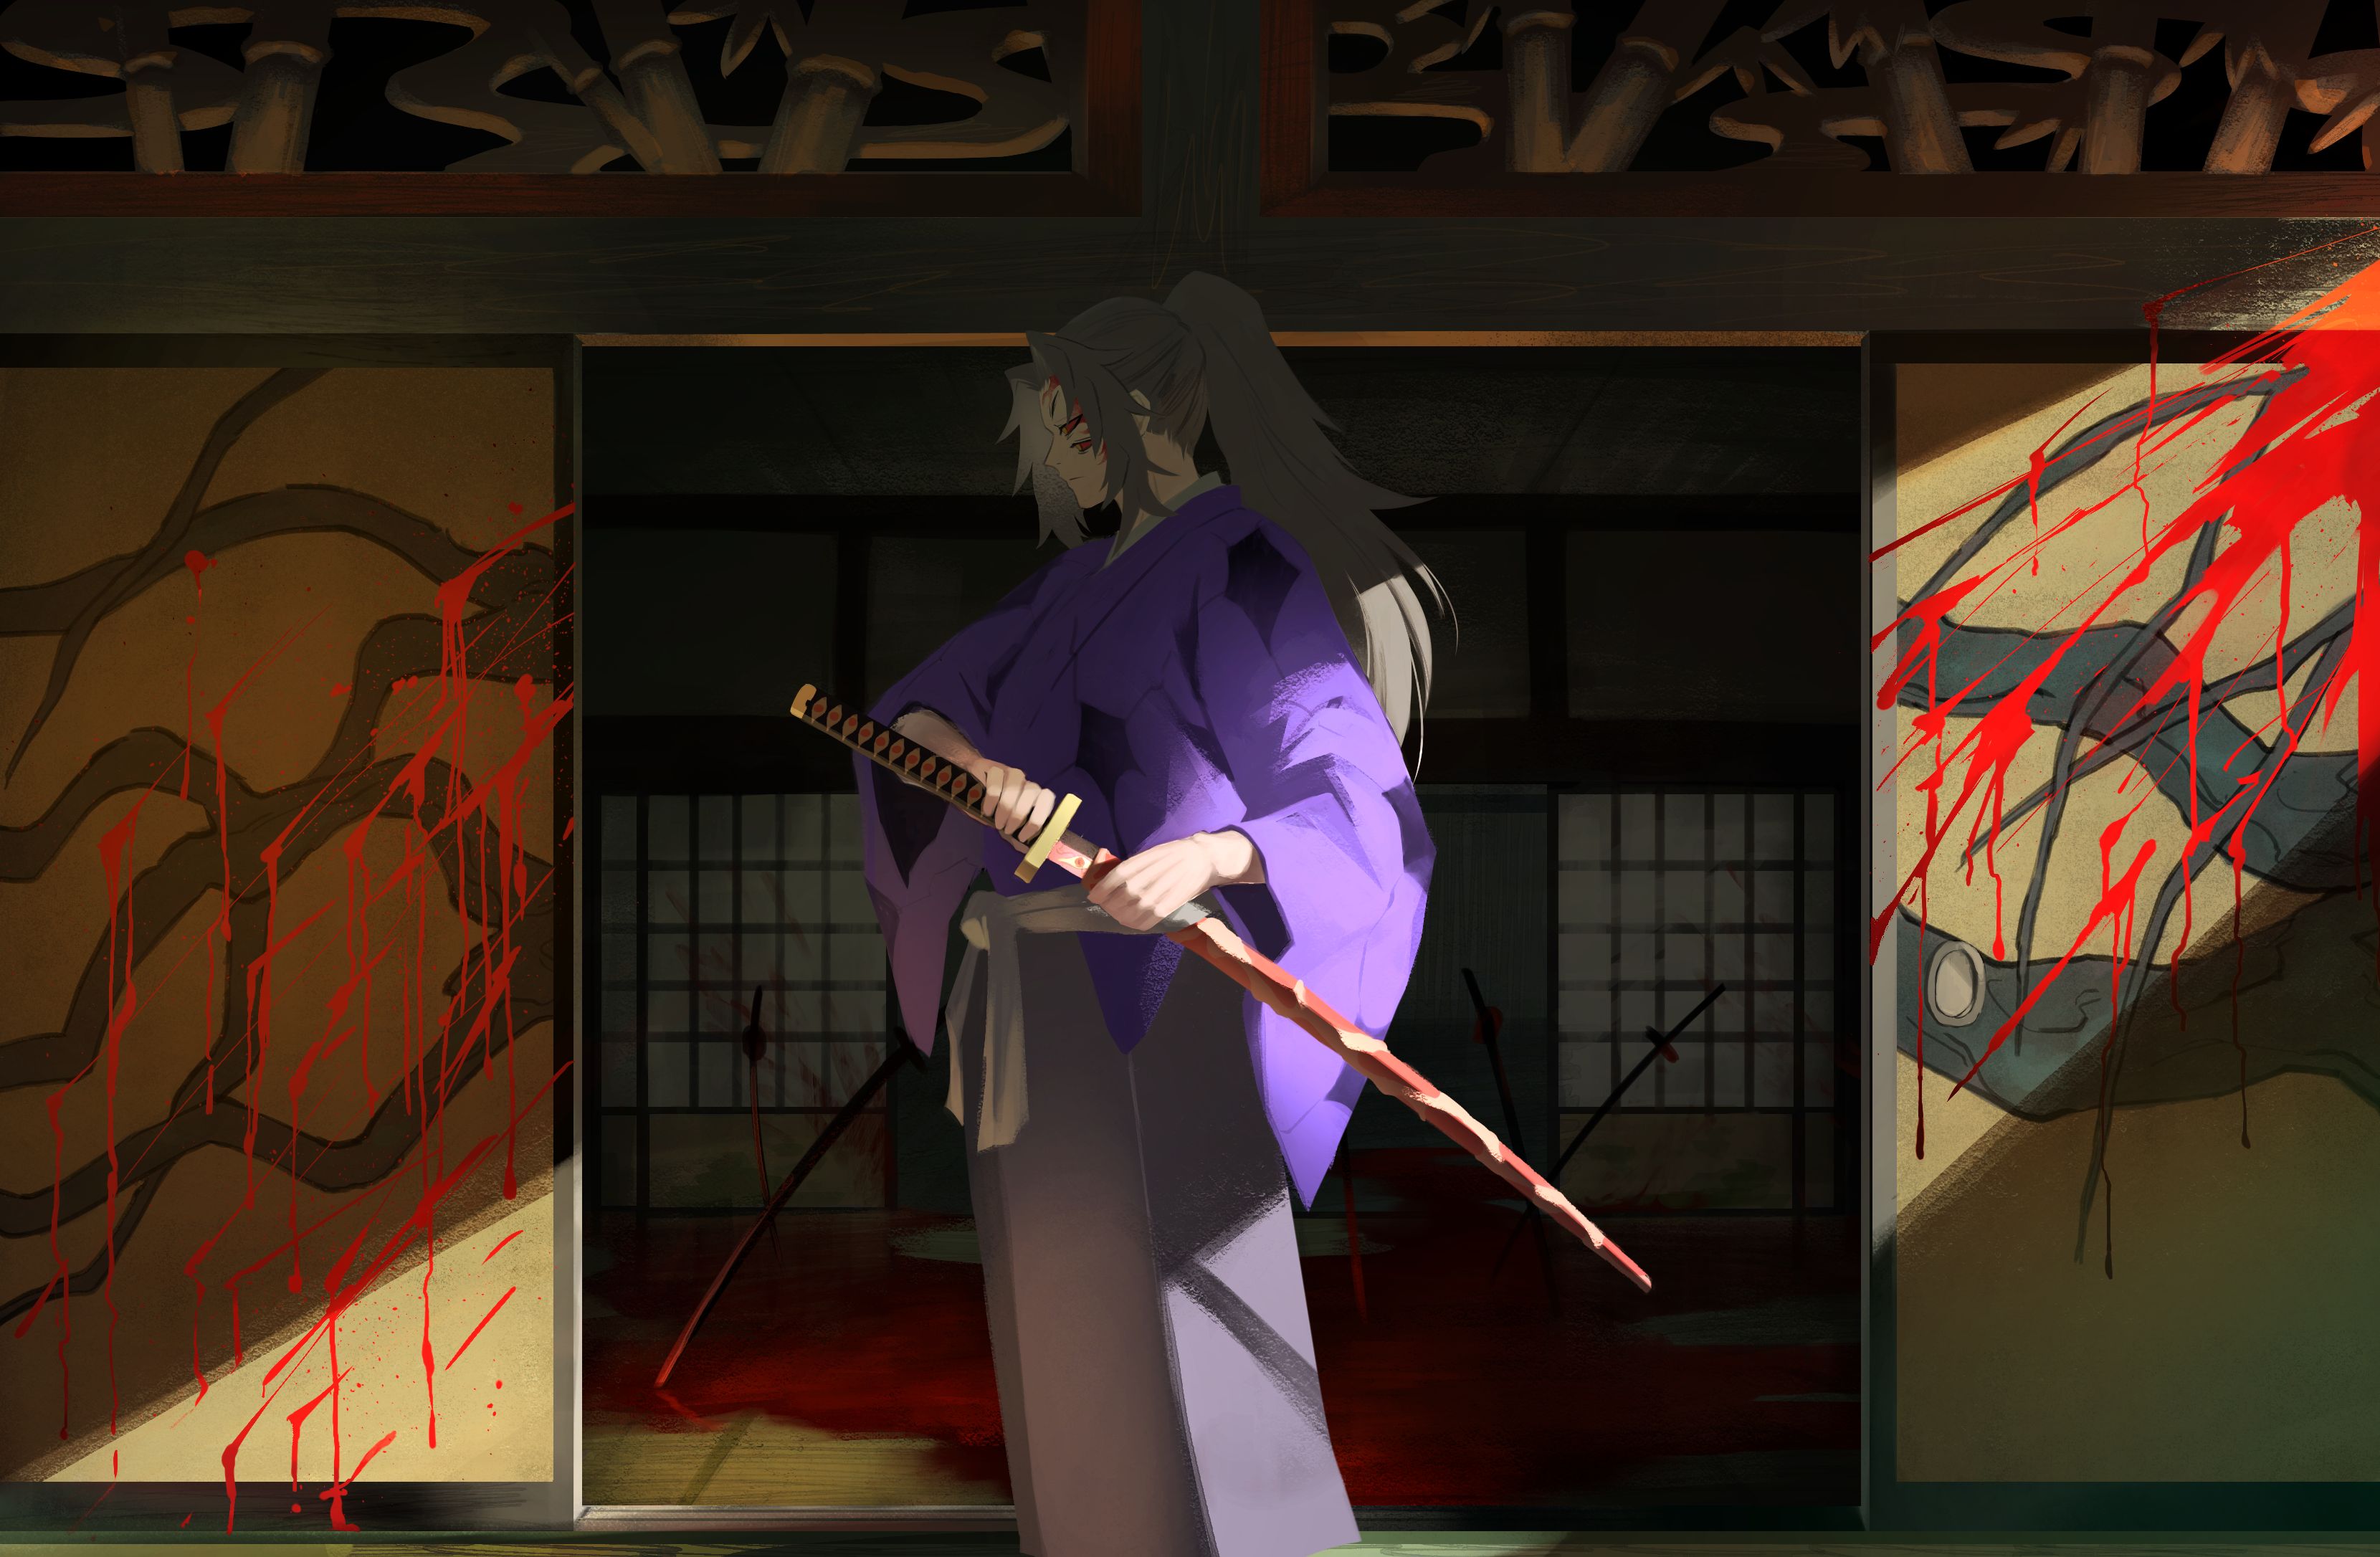 1067842 descargar imagen kokushibo (asesino de demonios), animado, demon slayer: kimetsu no yaiba: fondos de pantalla y protectores de pantalla gratis